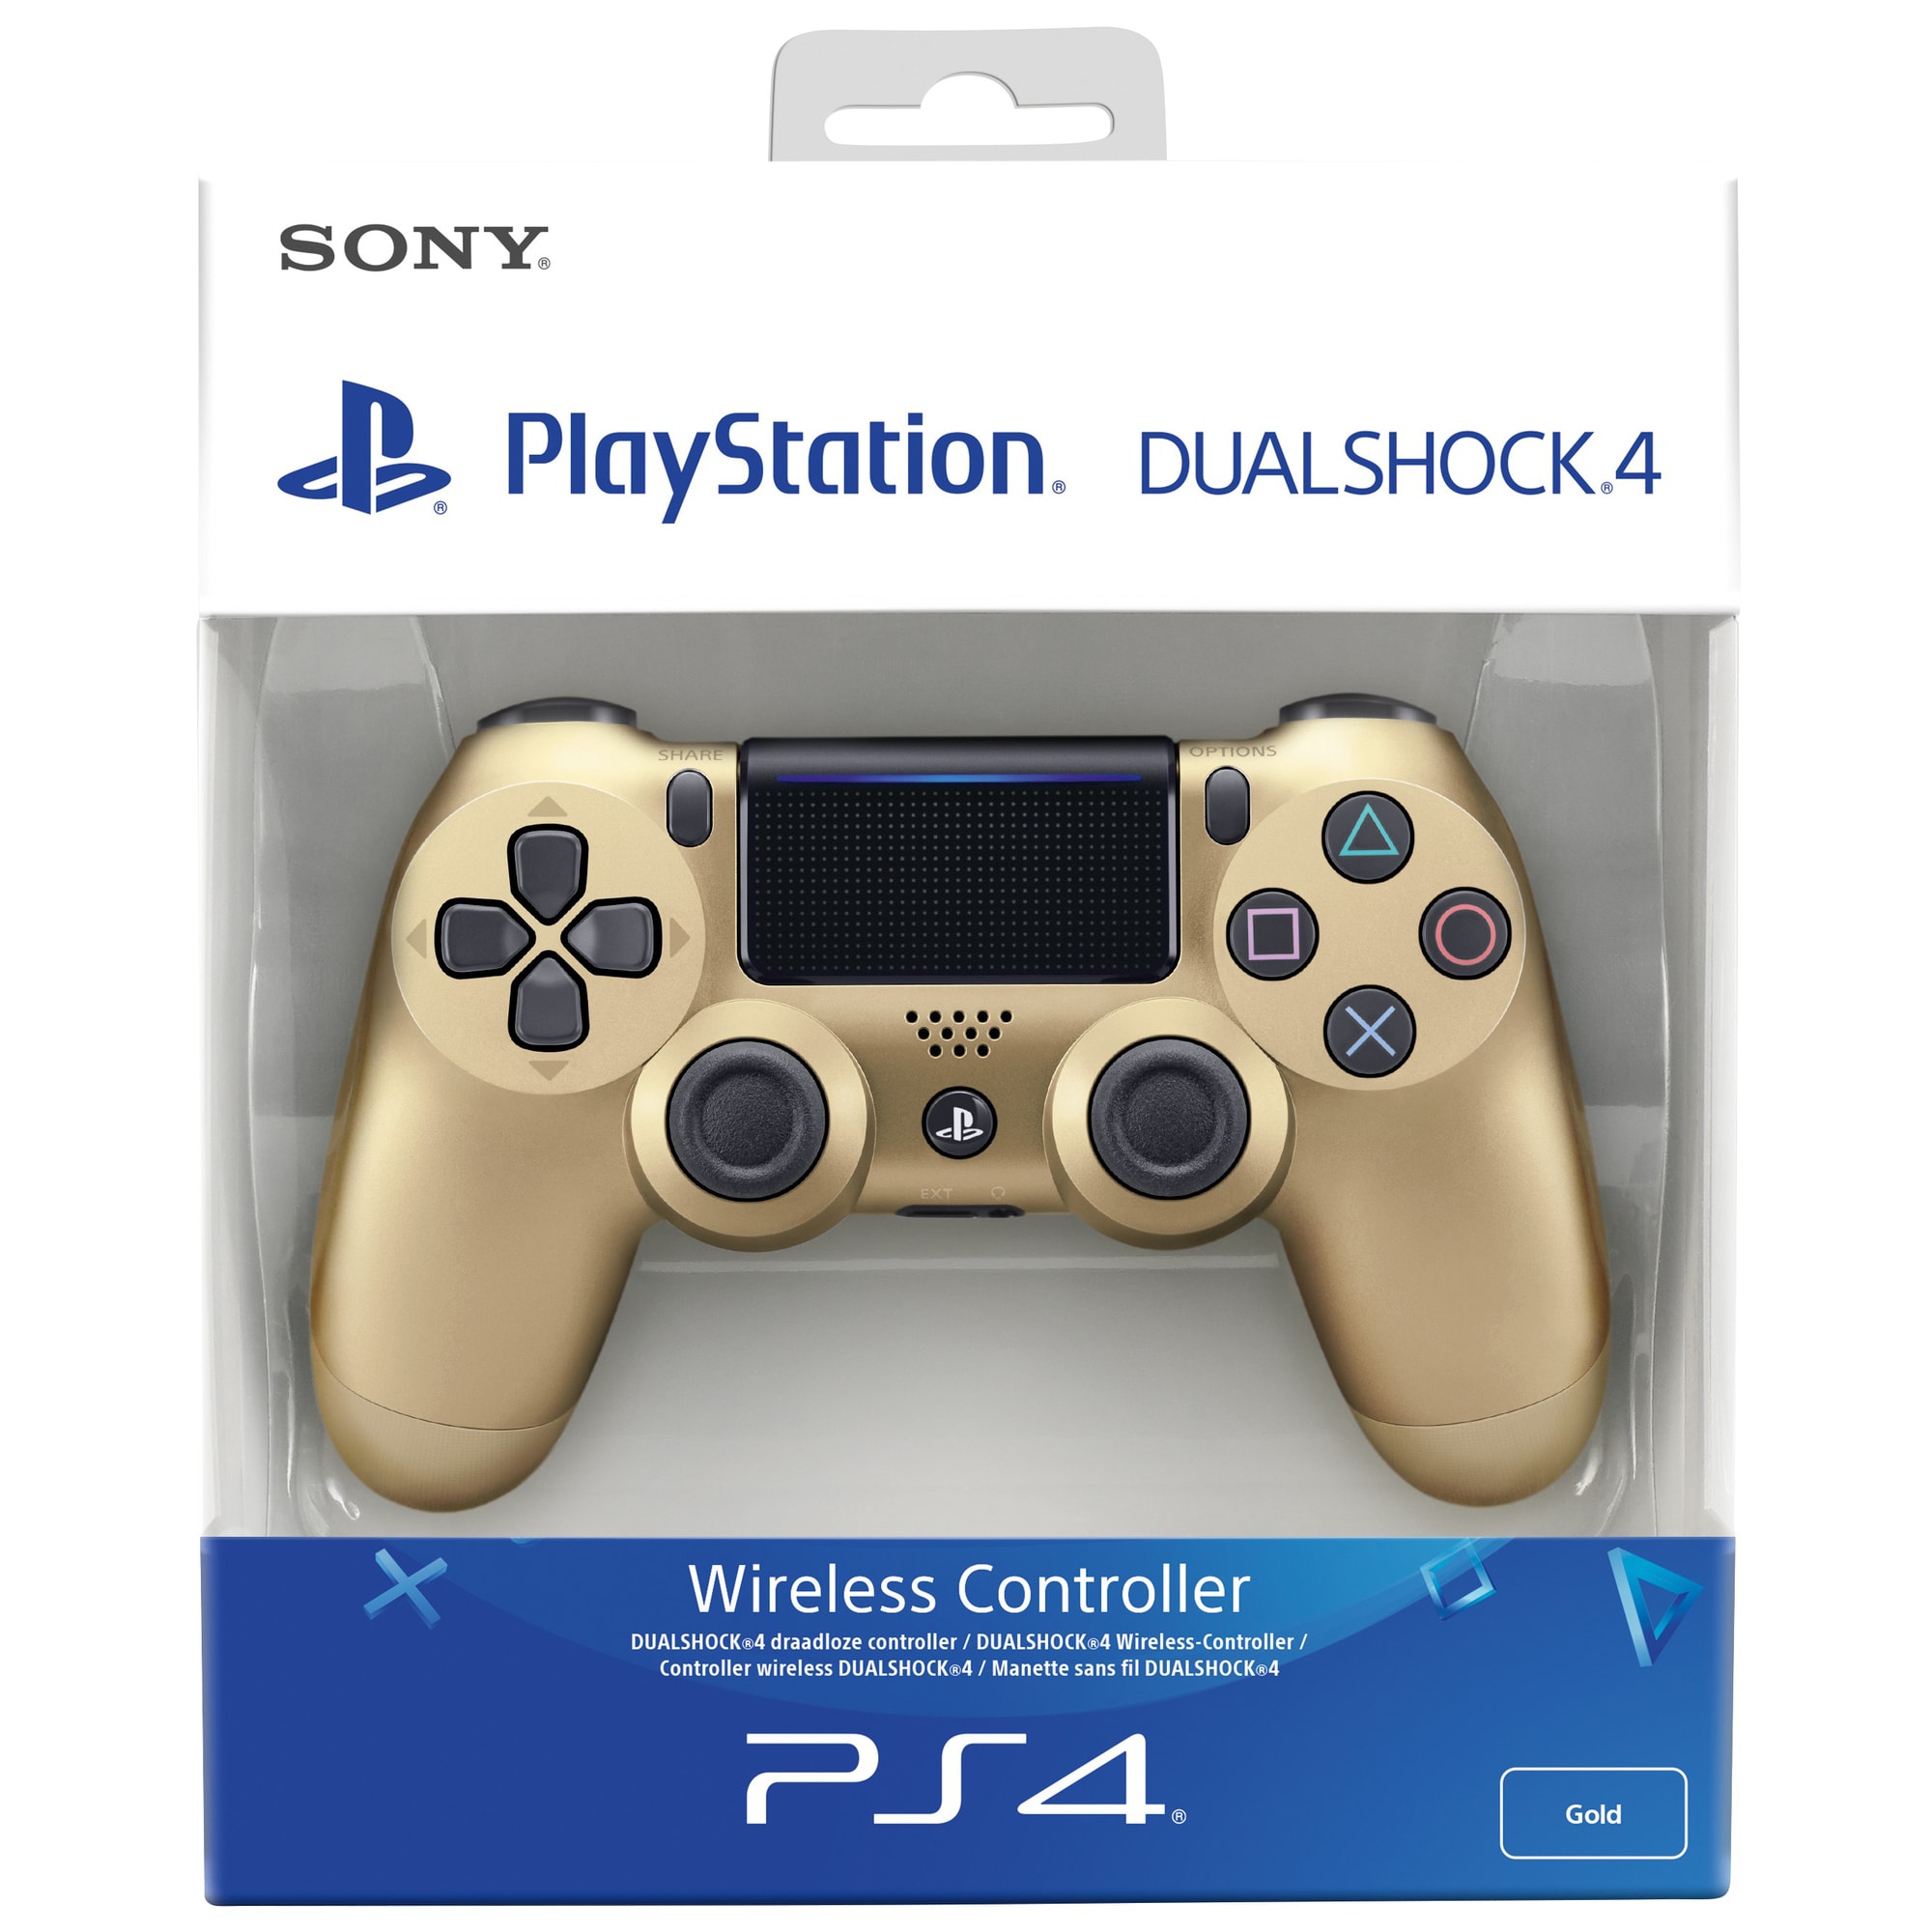 PS4 DualShock 4 trådløs controller - mat guld |